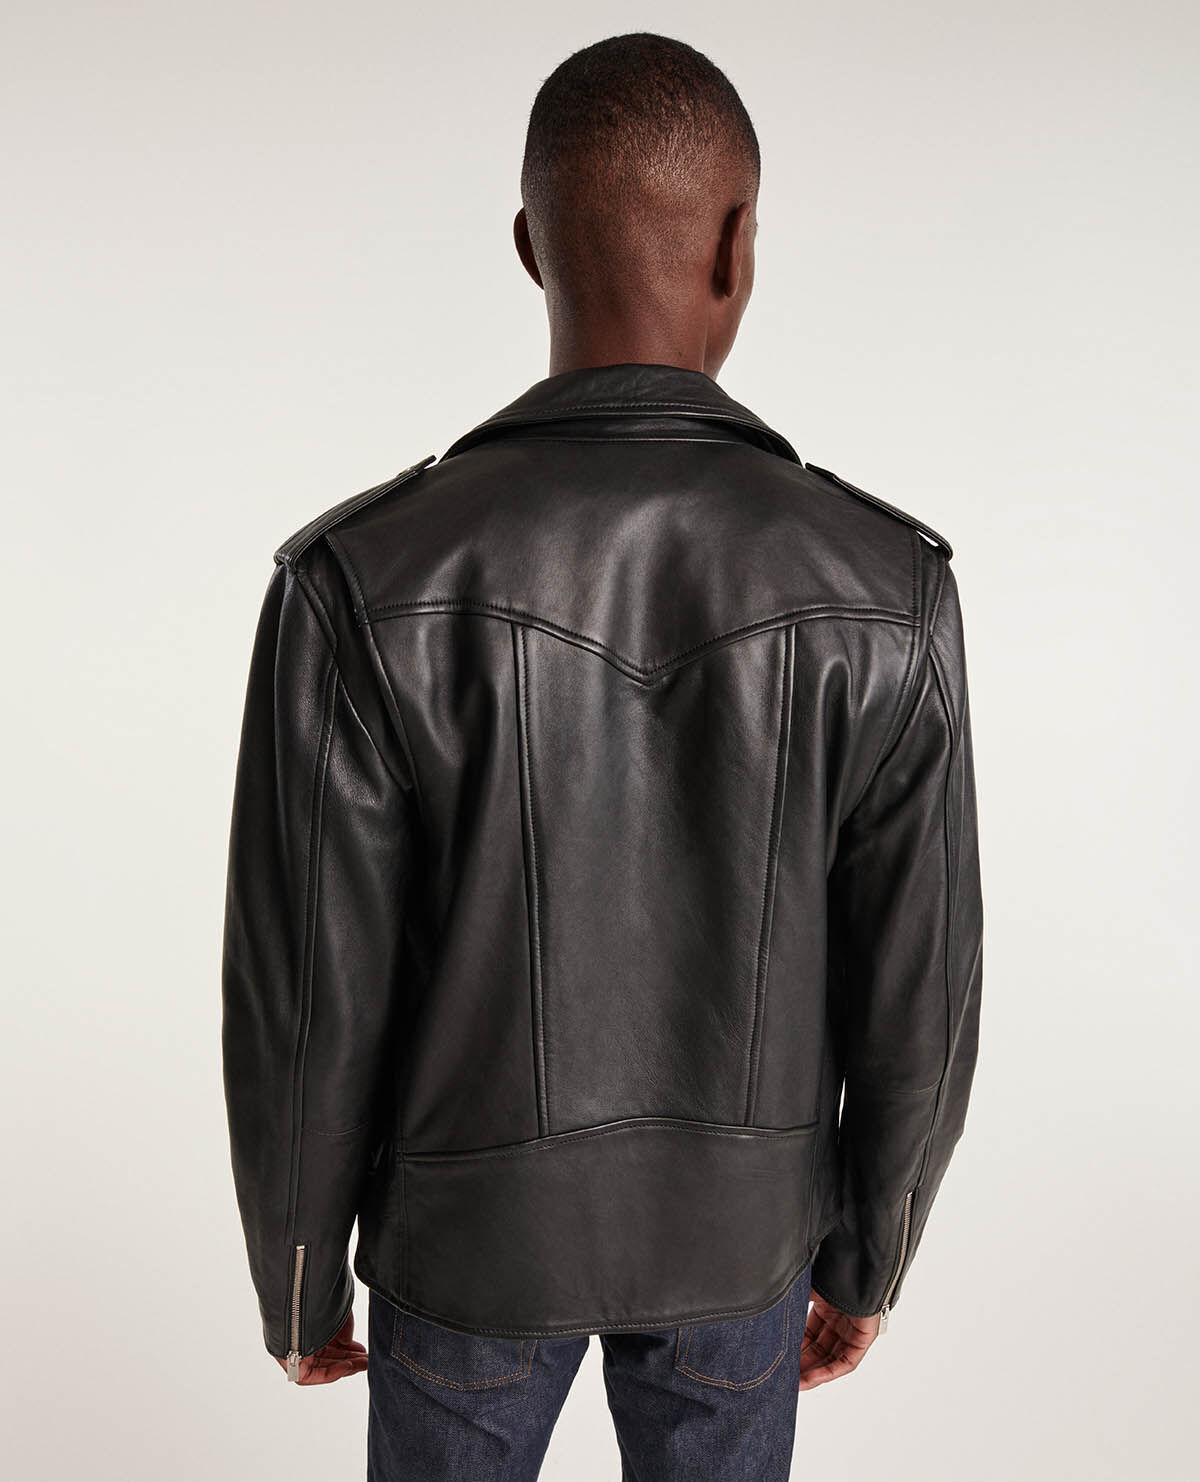 Zipped black leather biker jacket